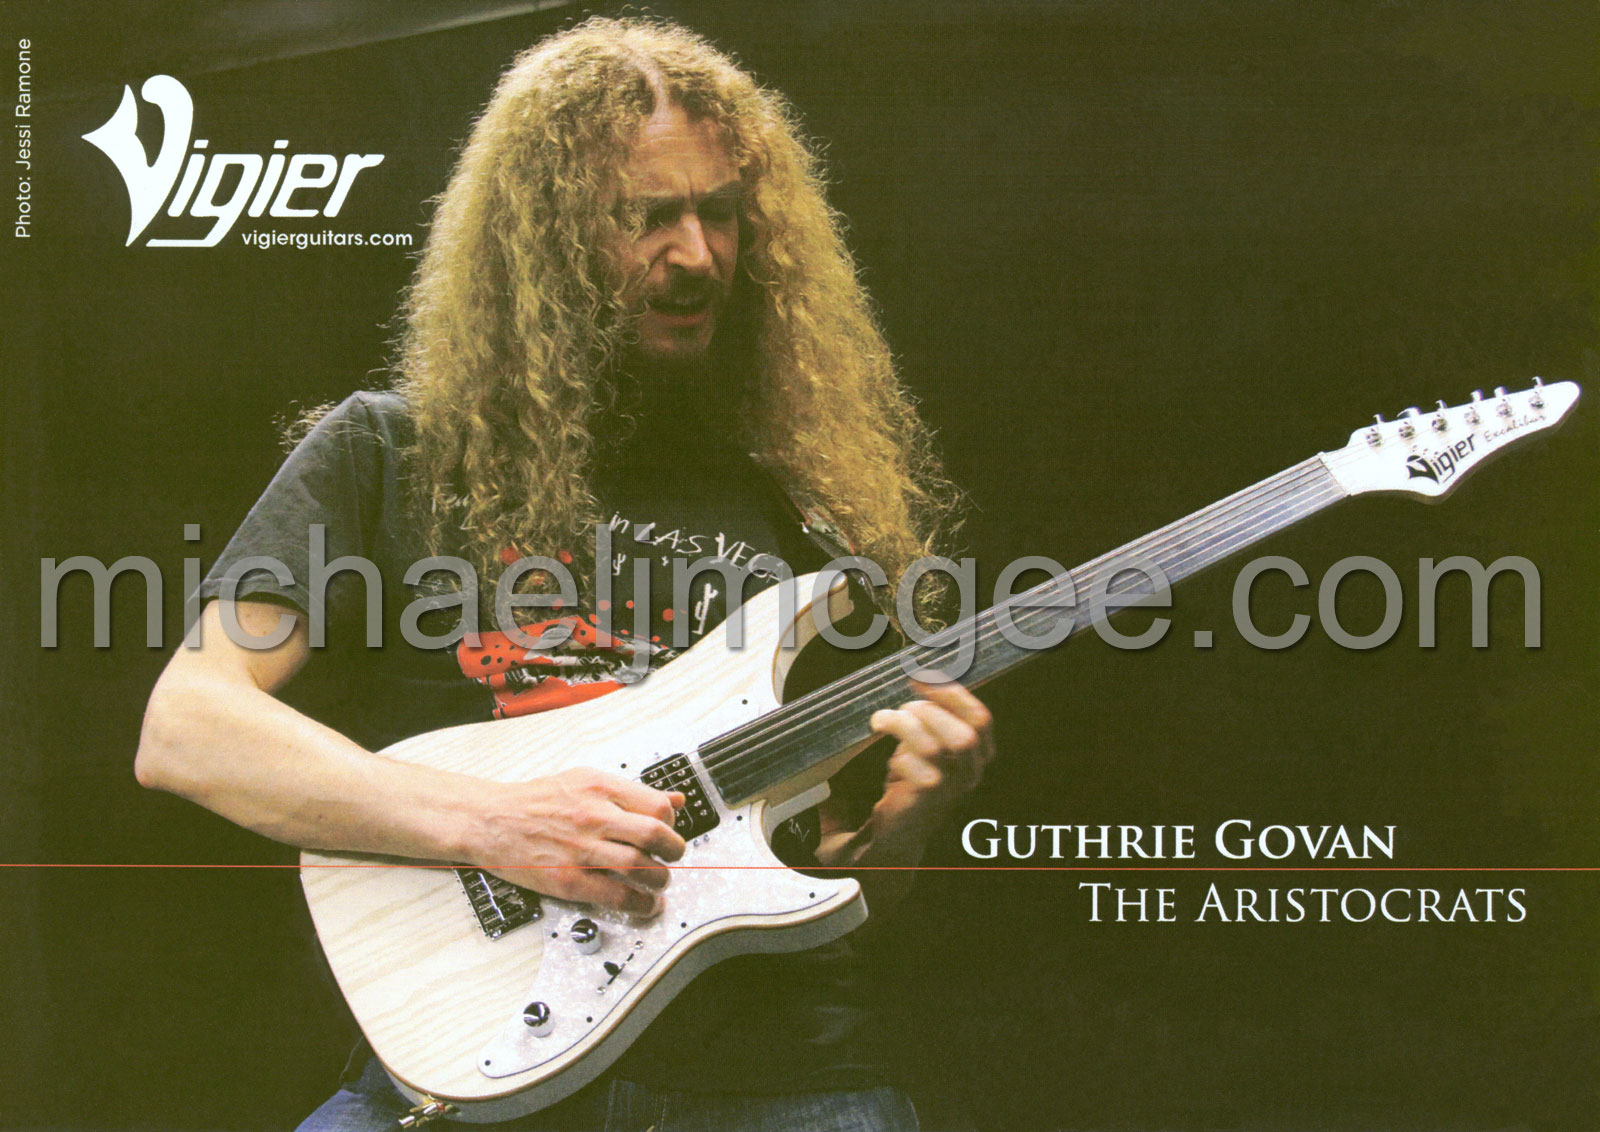 Guthrie Govan / michaeljmcgee.com